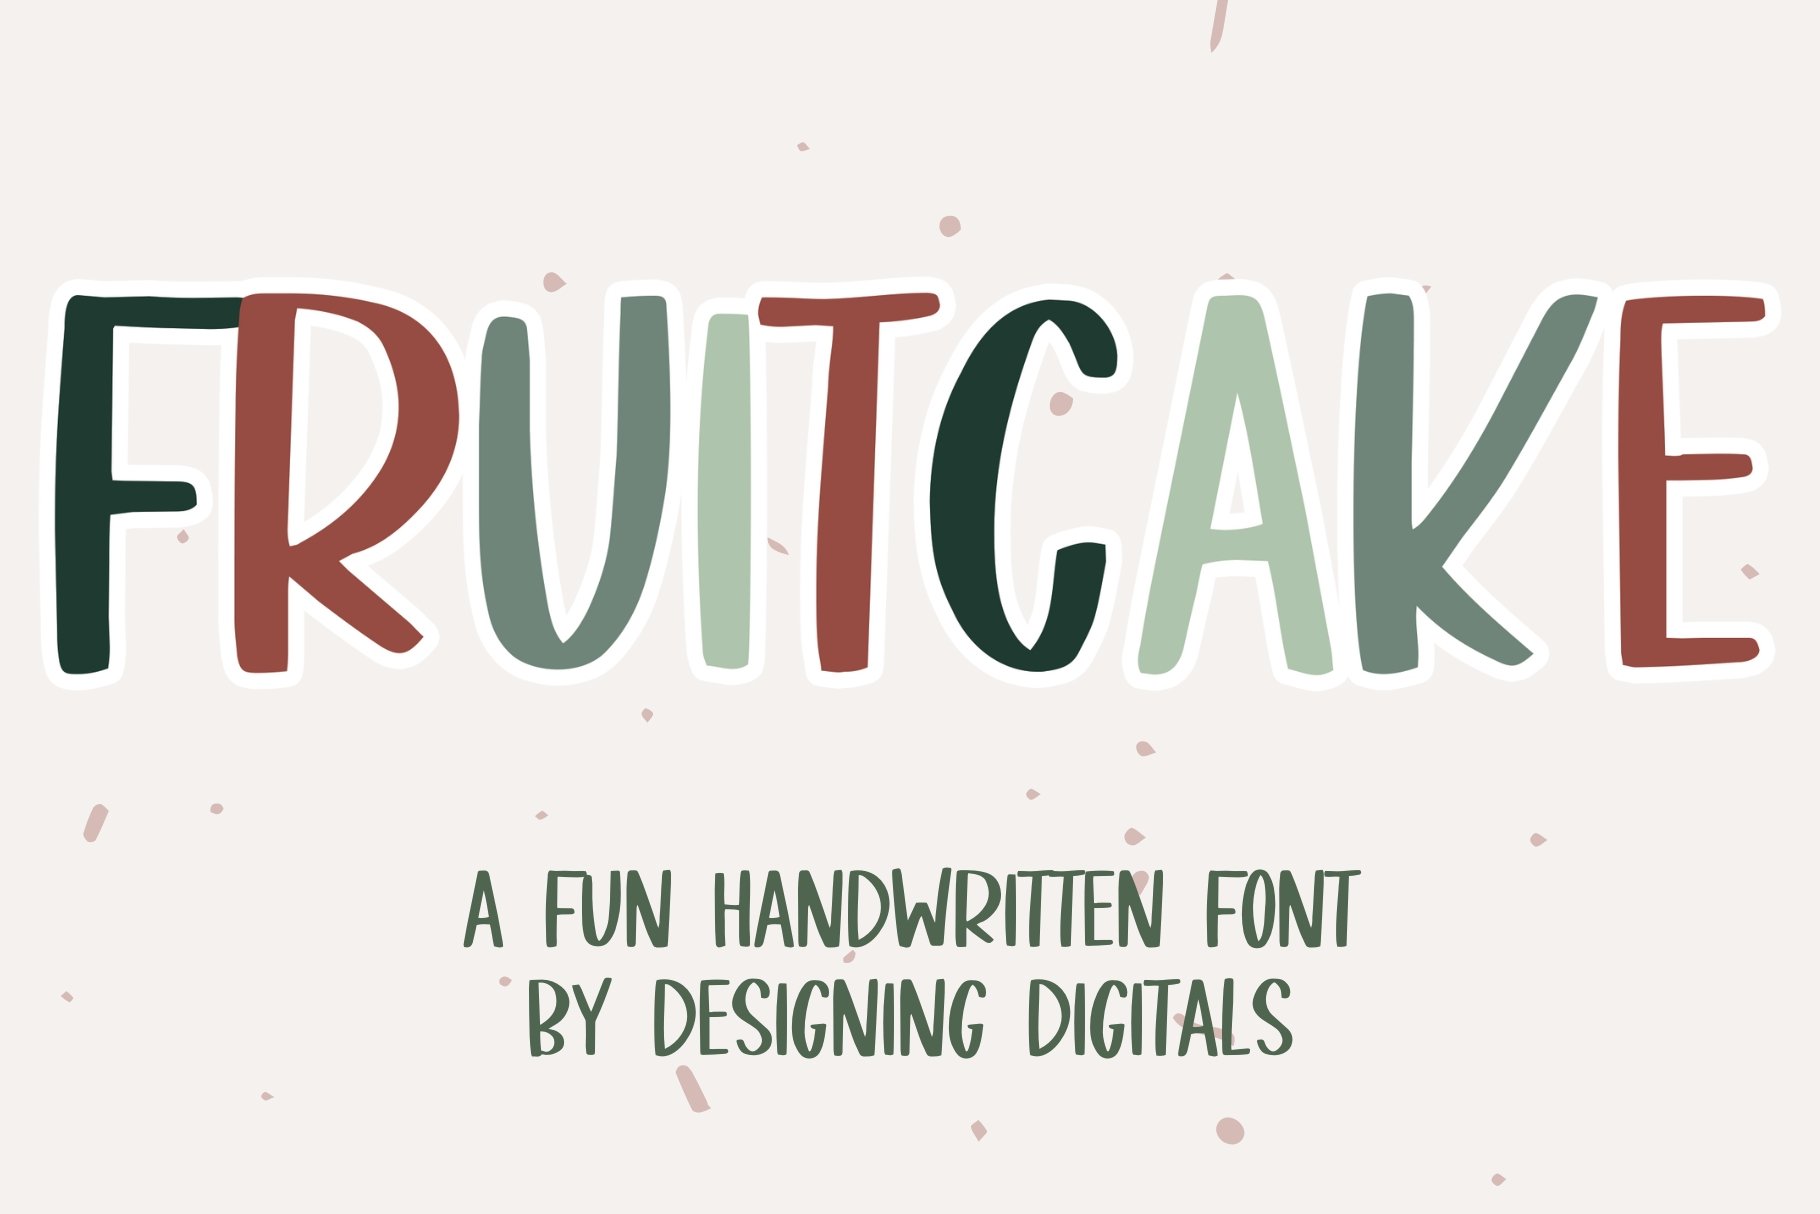 Fruitcake - A fun handwritten font cover image.